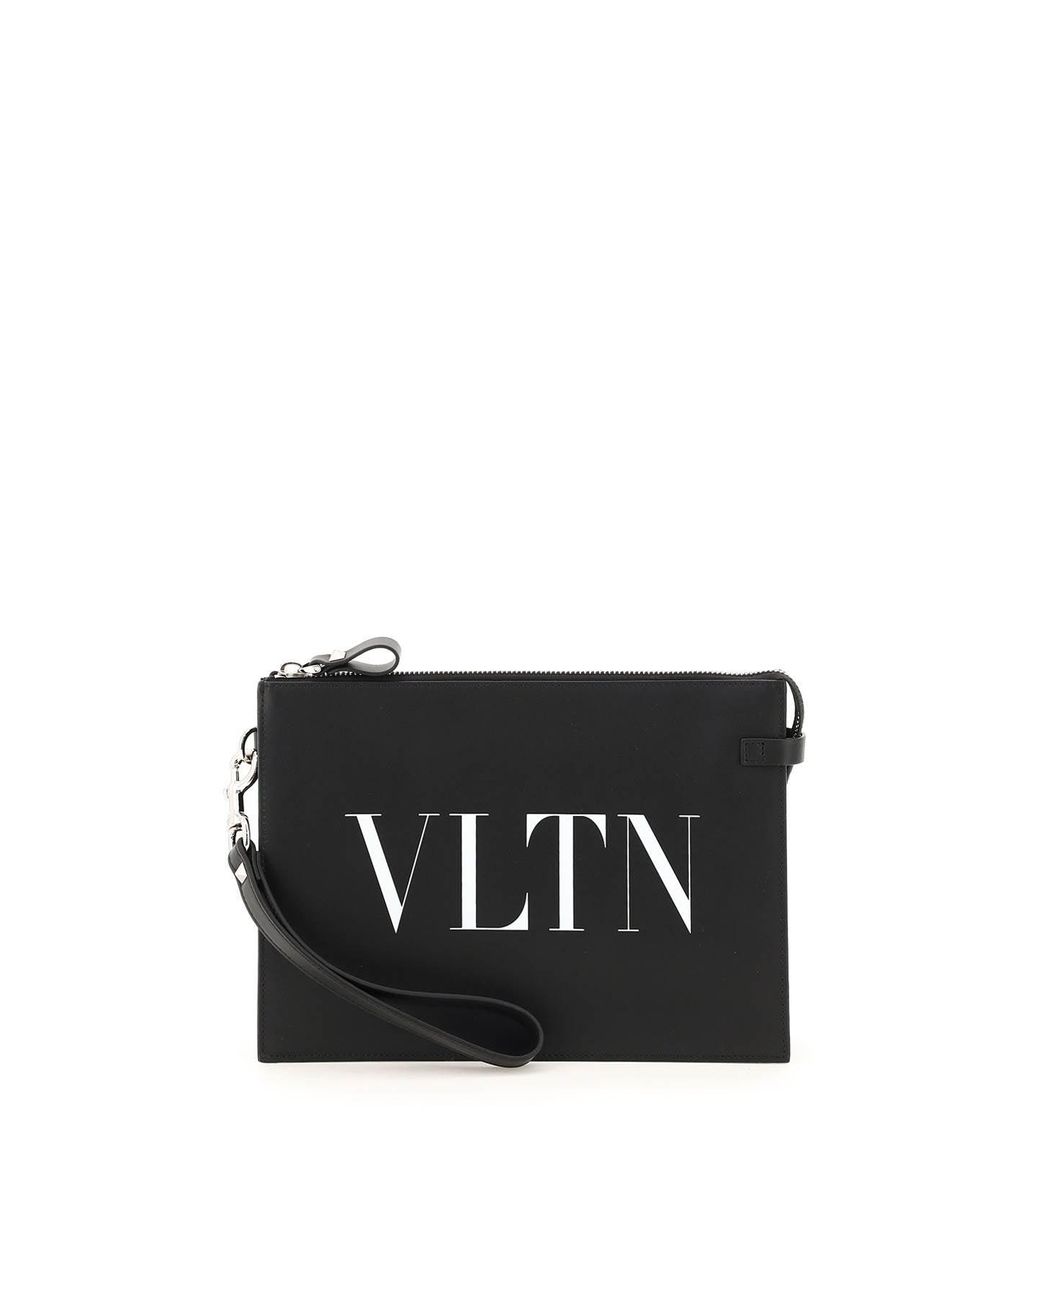 Valentino Garavani Vltn Leather Pouch in Black for Men - Lyst